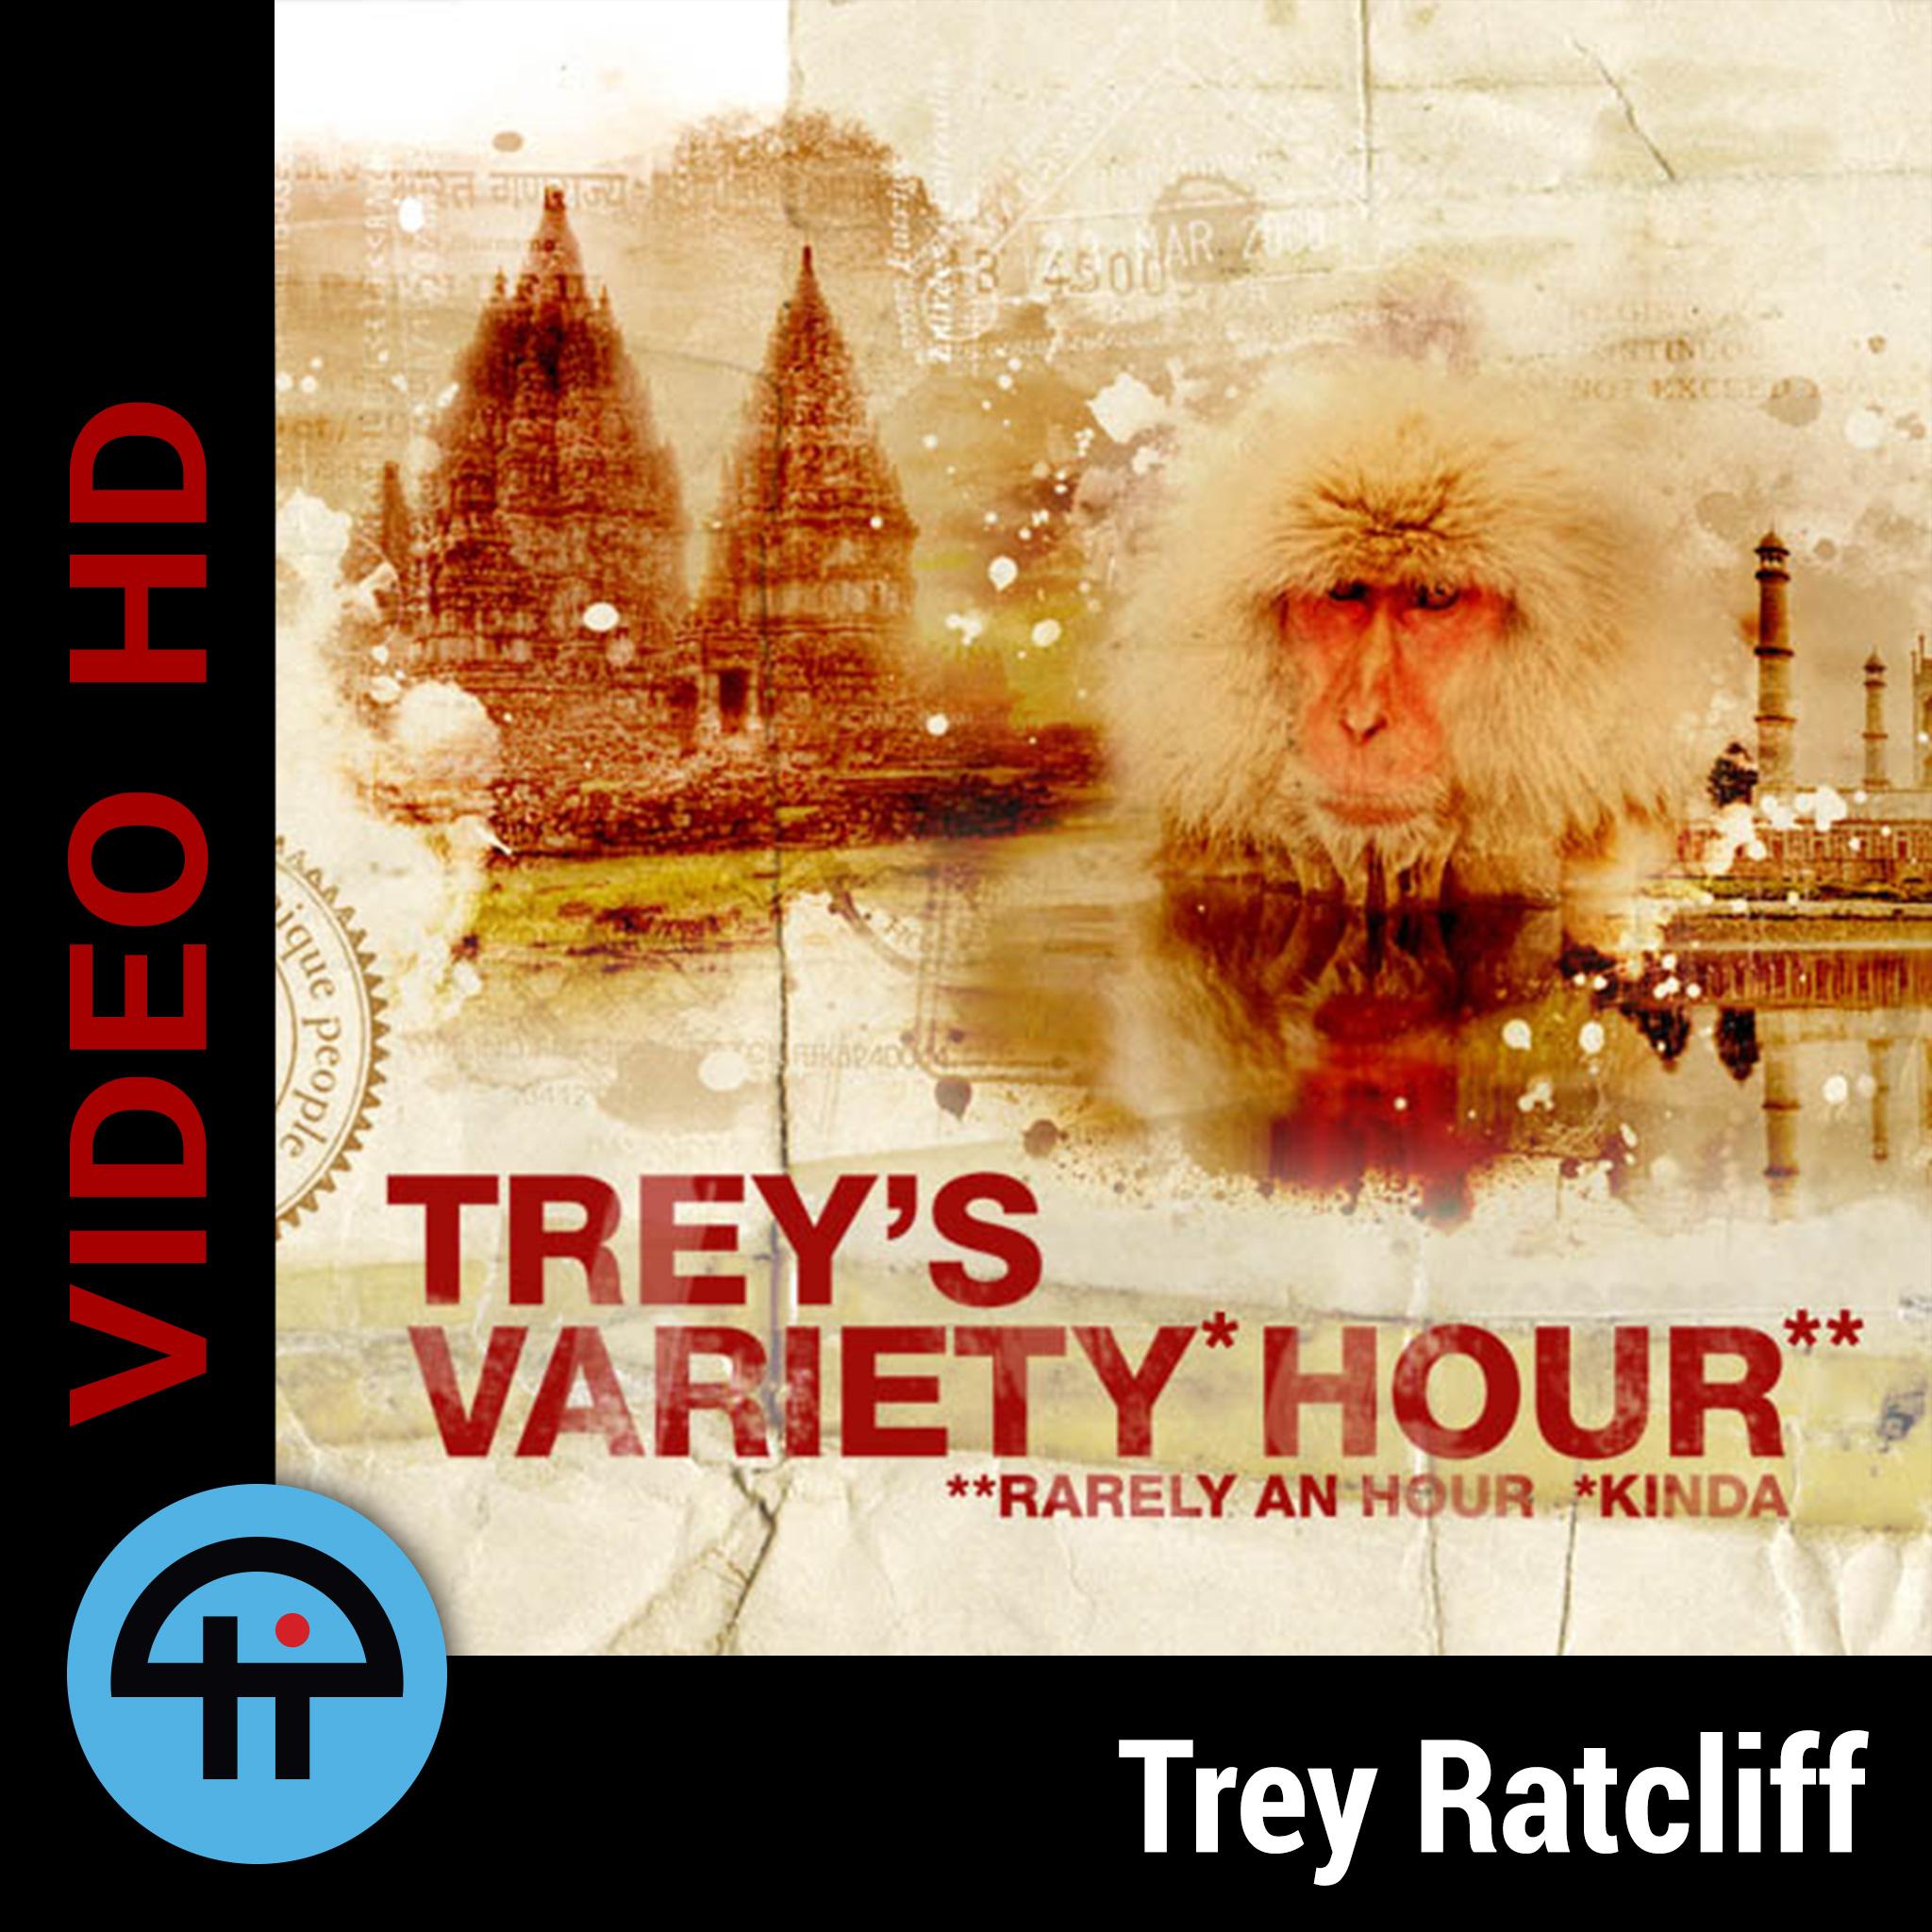 Trey's Variety Hour (Video)